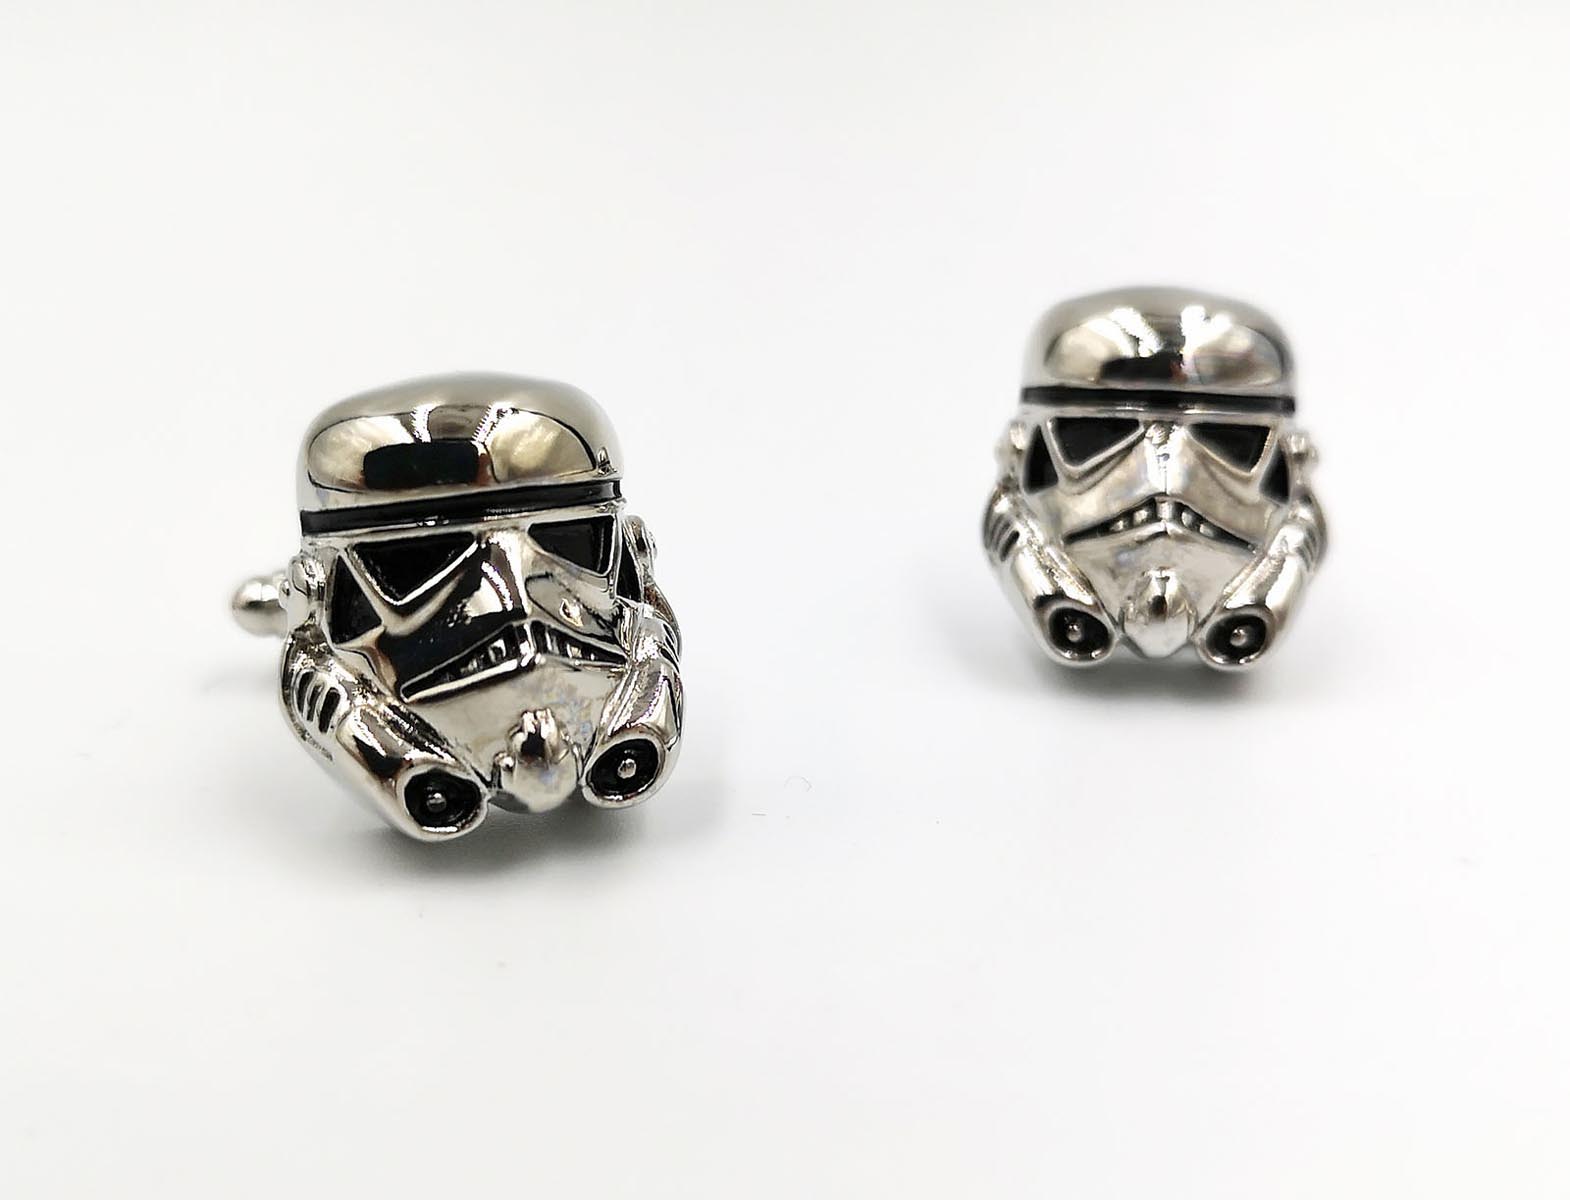 Star Wars Stormtrooper Storm Trooper Boba Fett Helmet Men/'s Shirt Cufflinks Gift